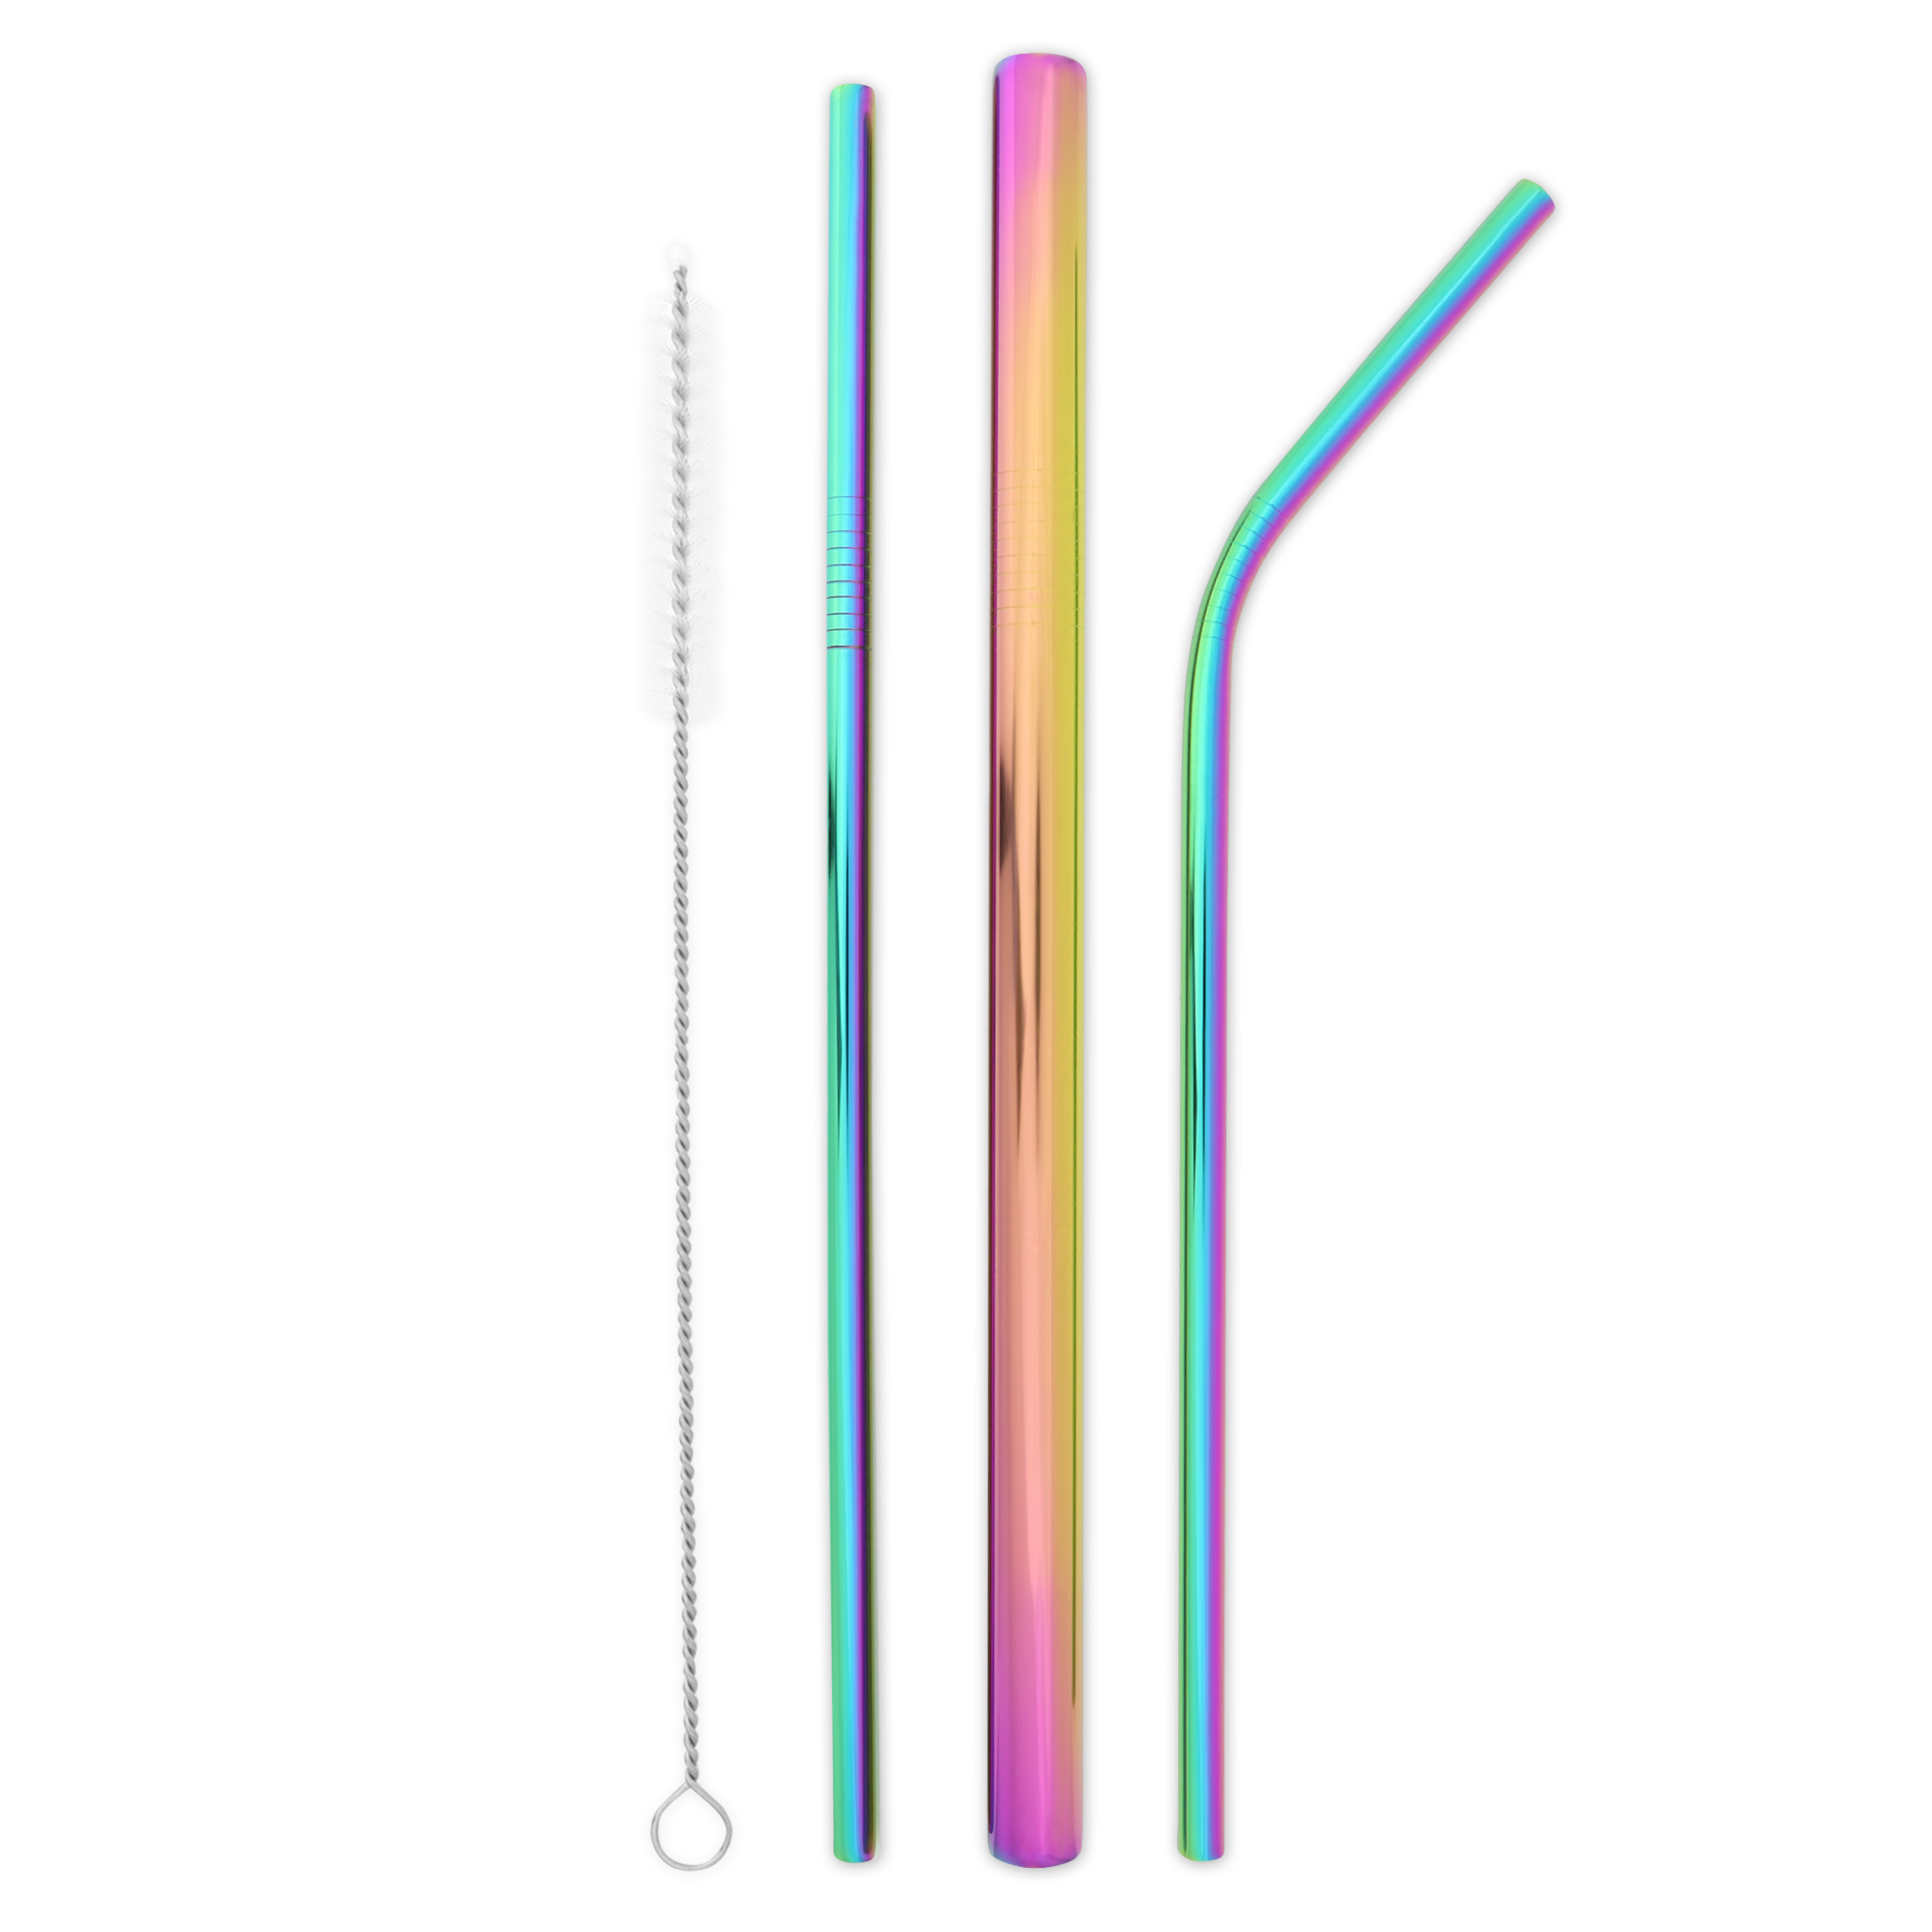 Triple Threat Stainless Steel Straws Box Set (Rainbow)